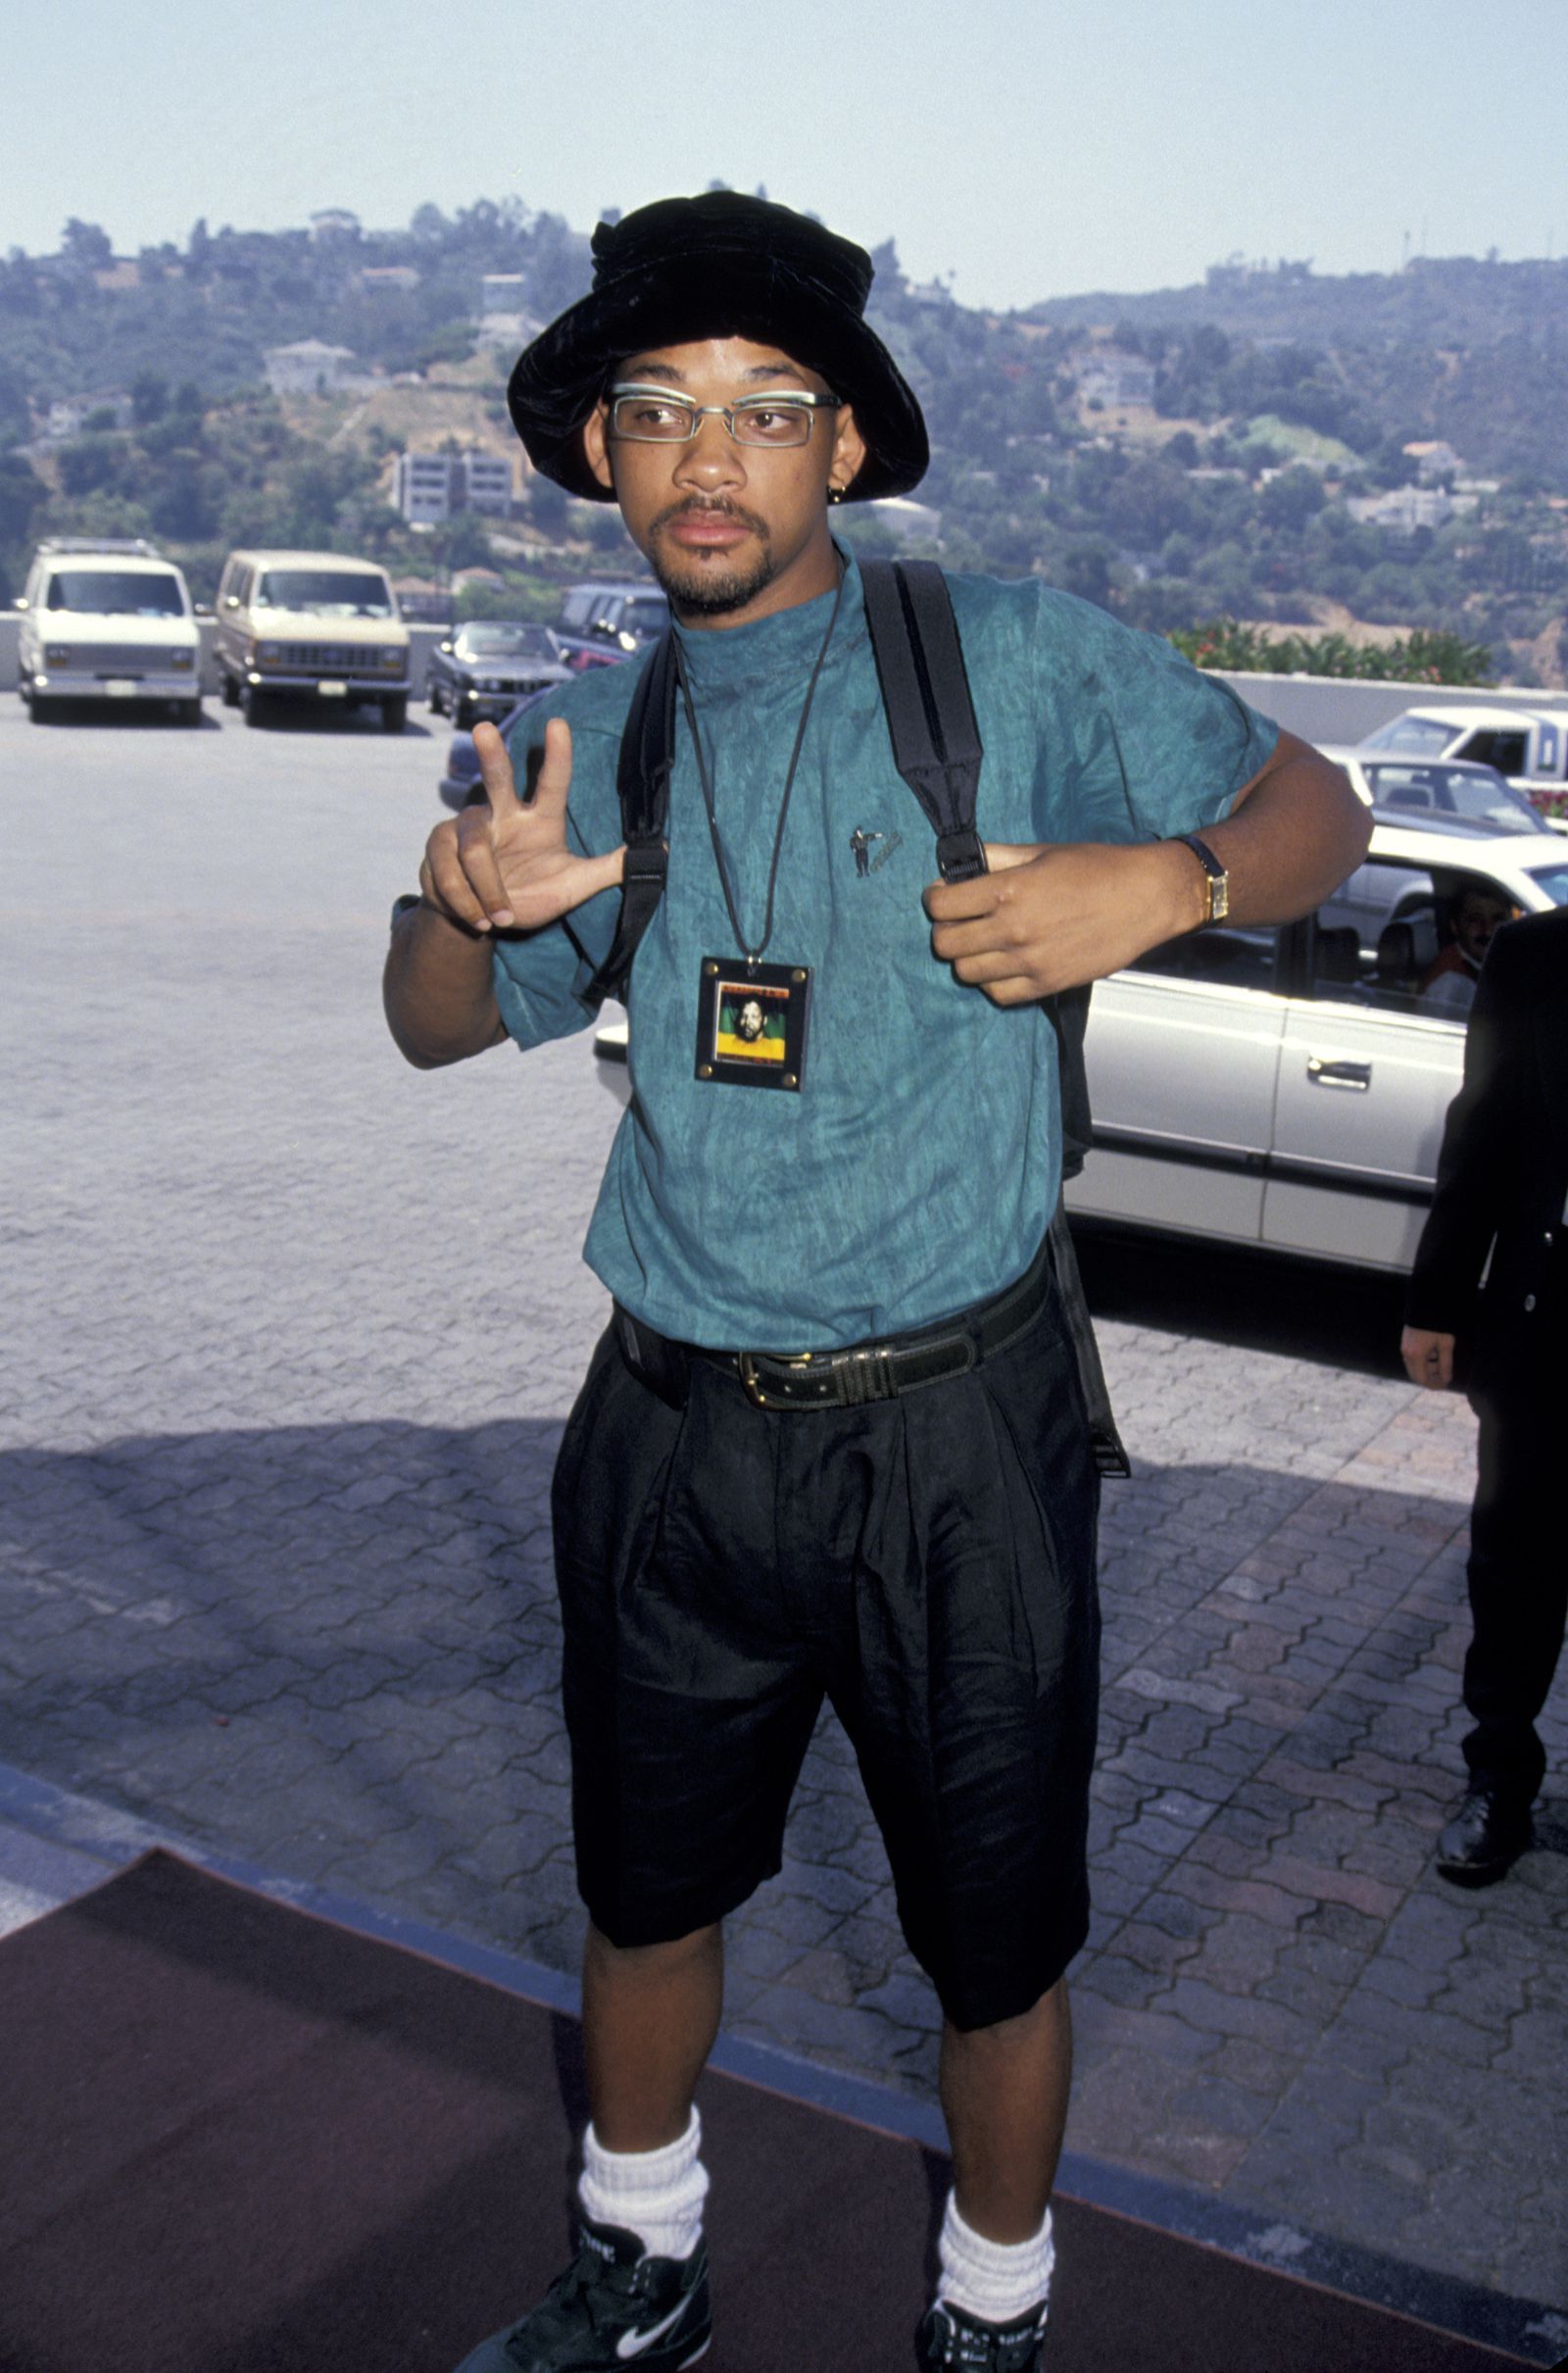 90s hip hop fashion aesthetic